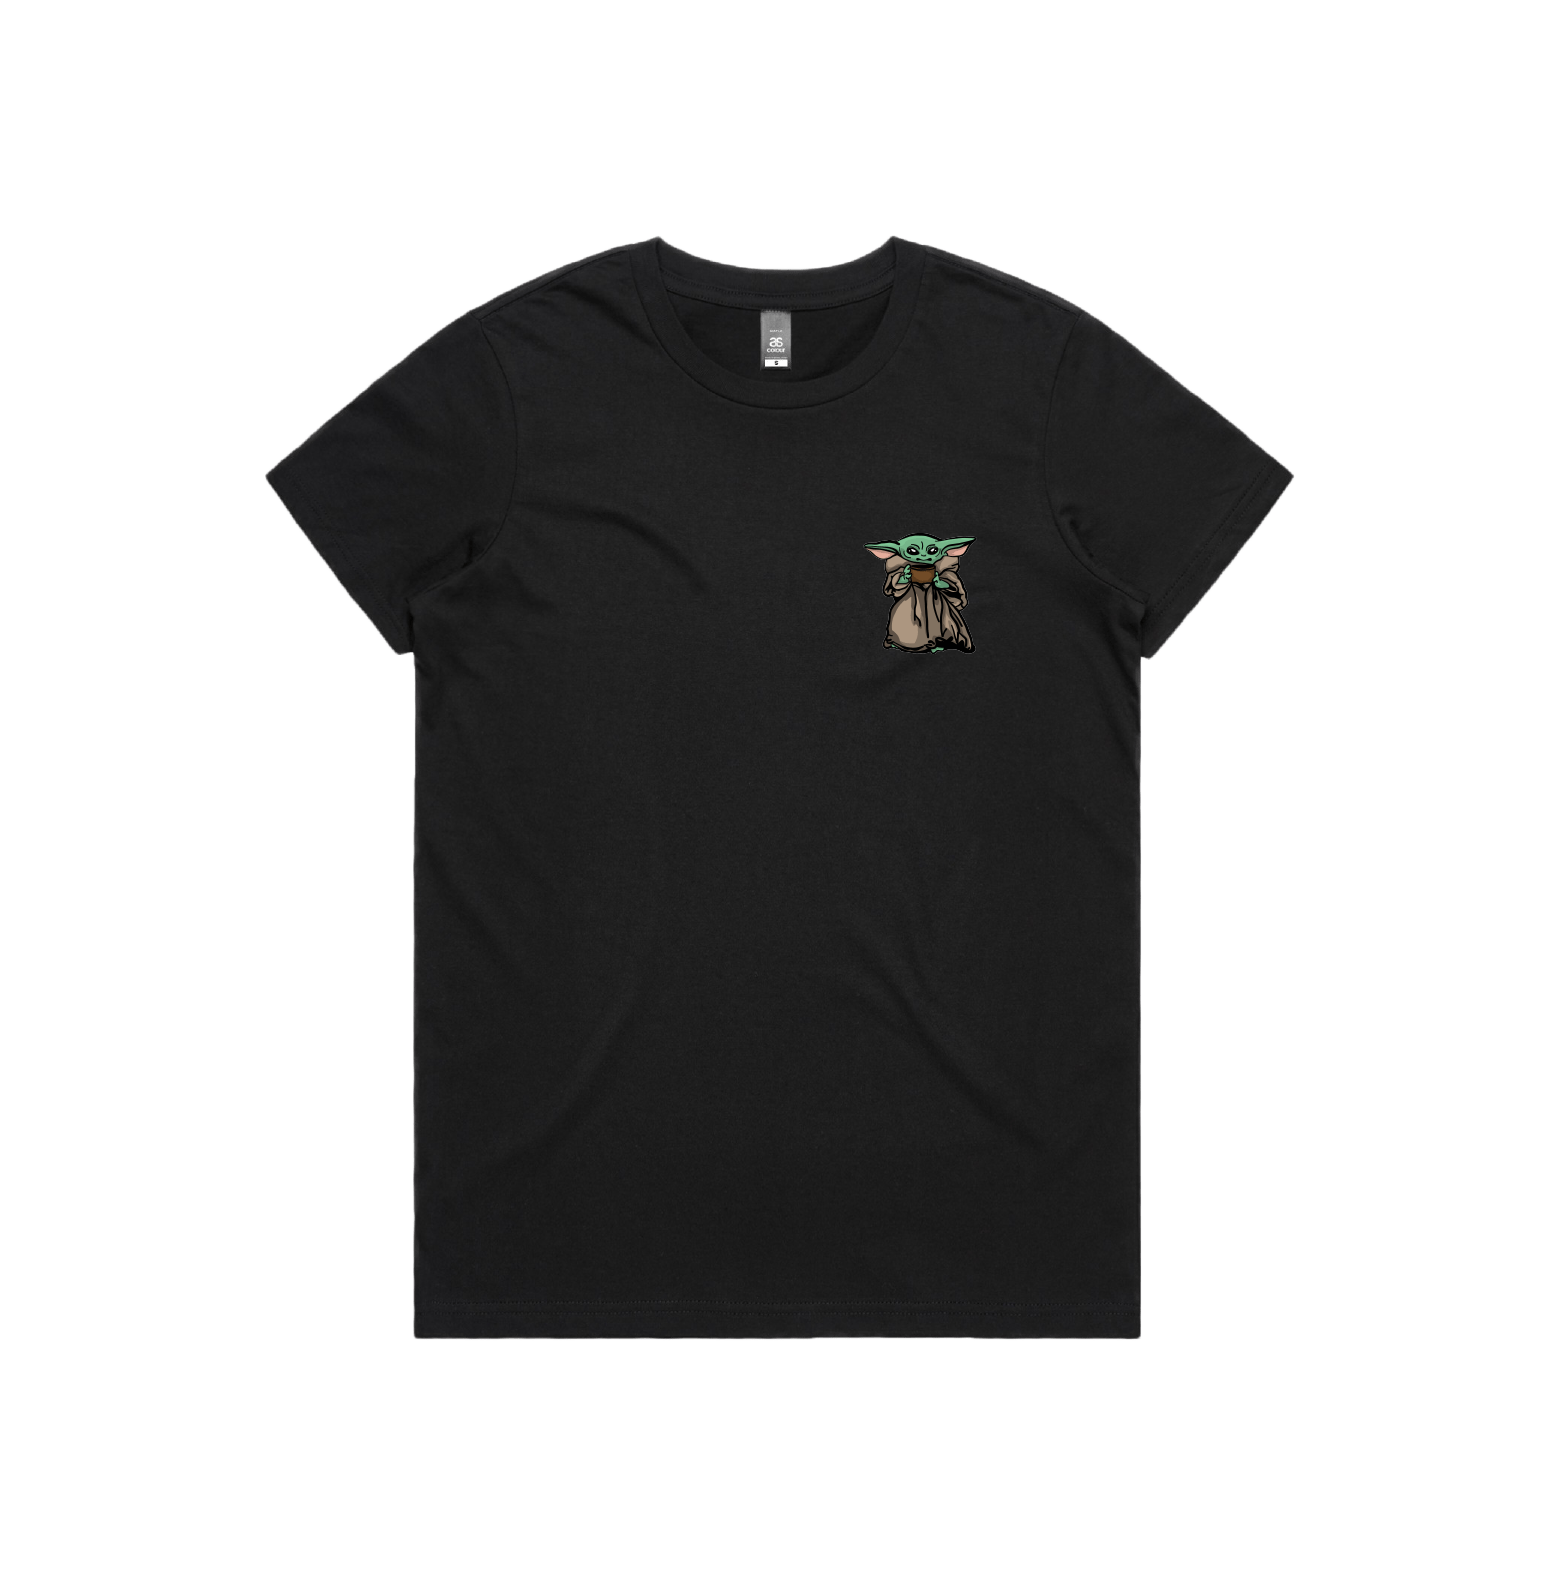 XS / Black / Small Front Design Baby Yoda 👶 - Women's T Shirt